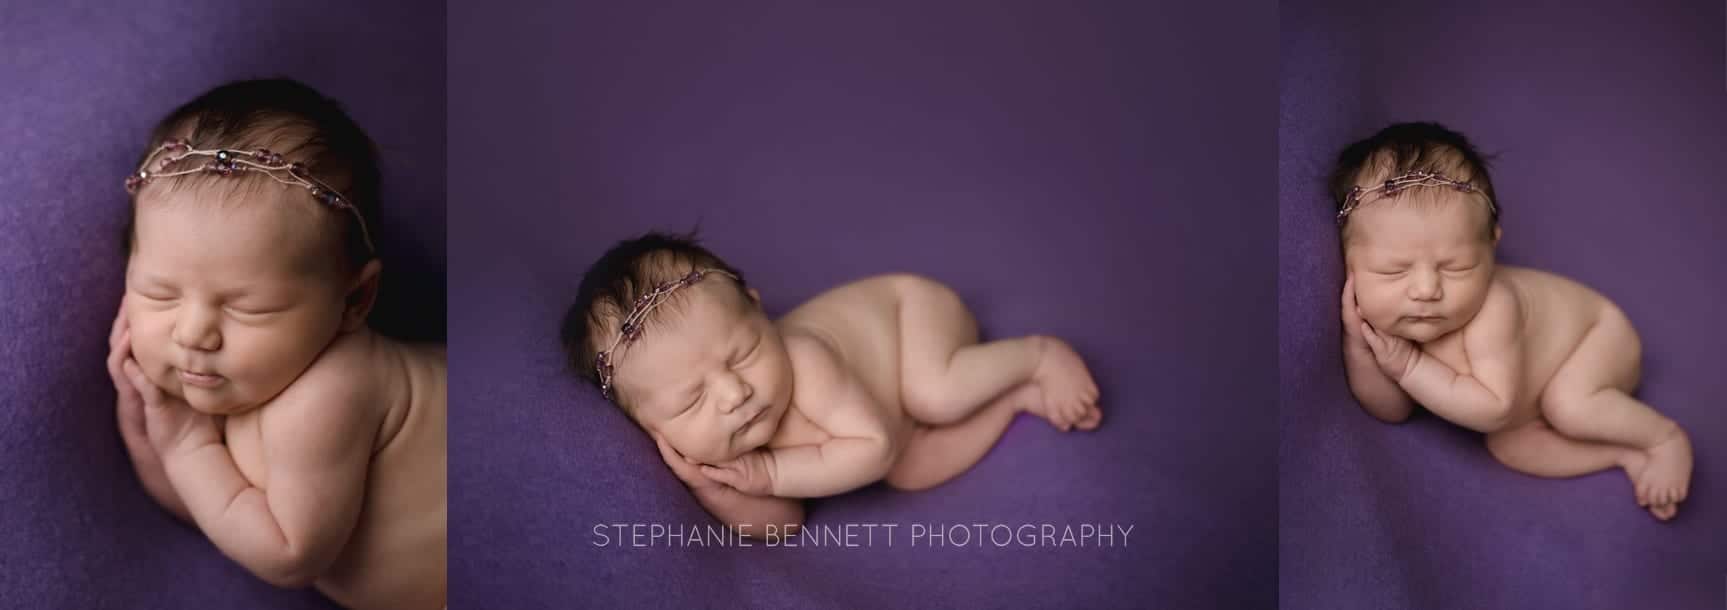 Newborn photography near burnsville mn 